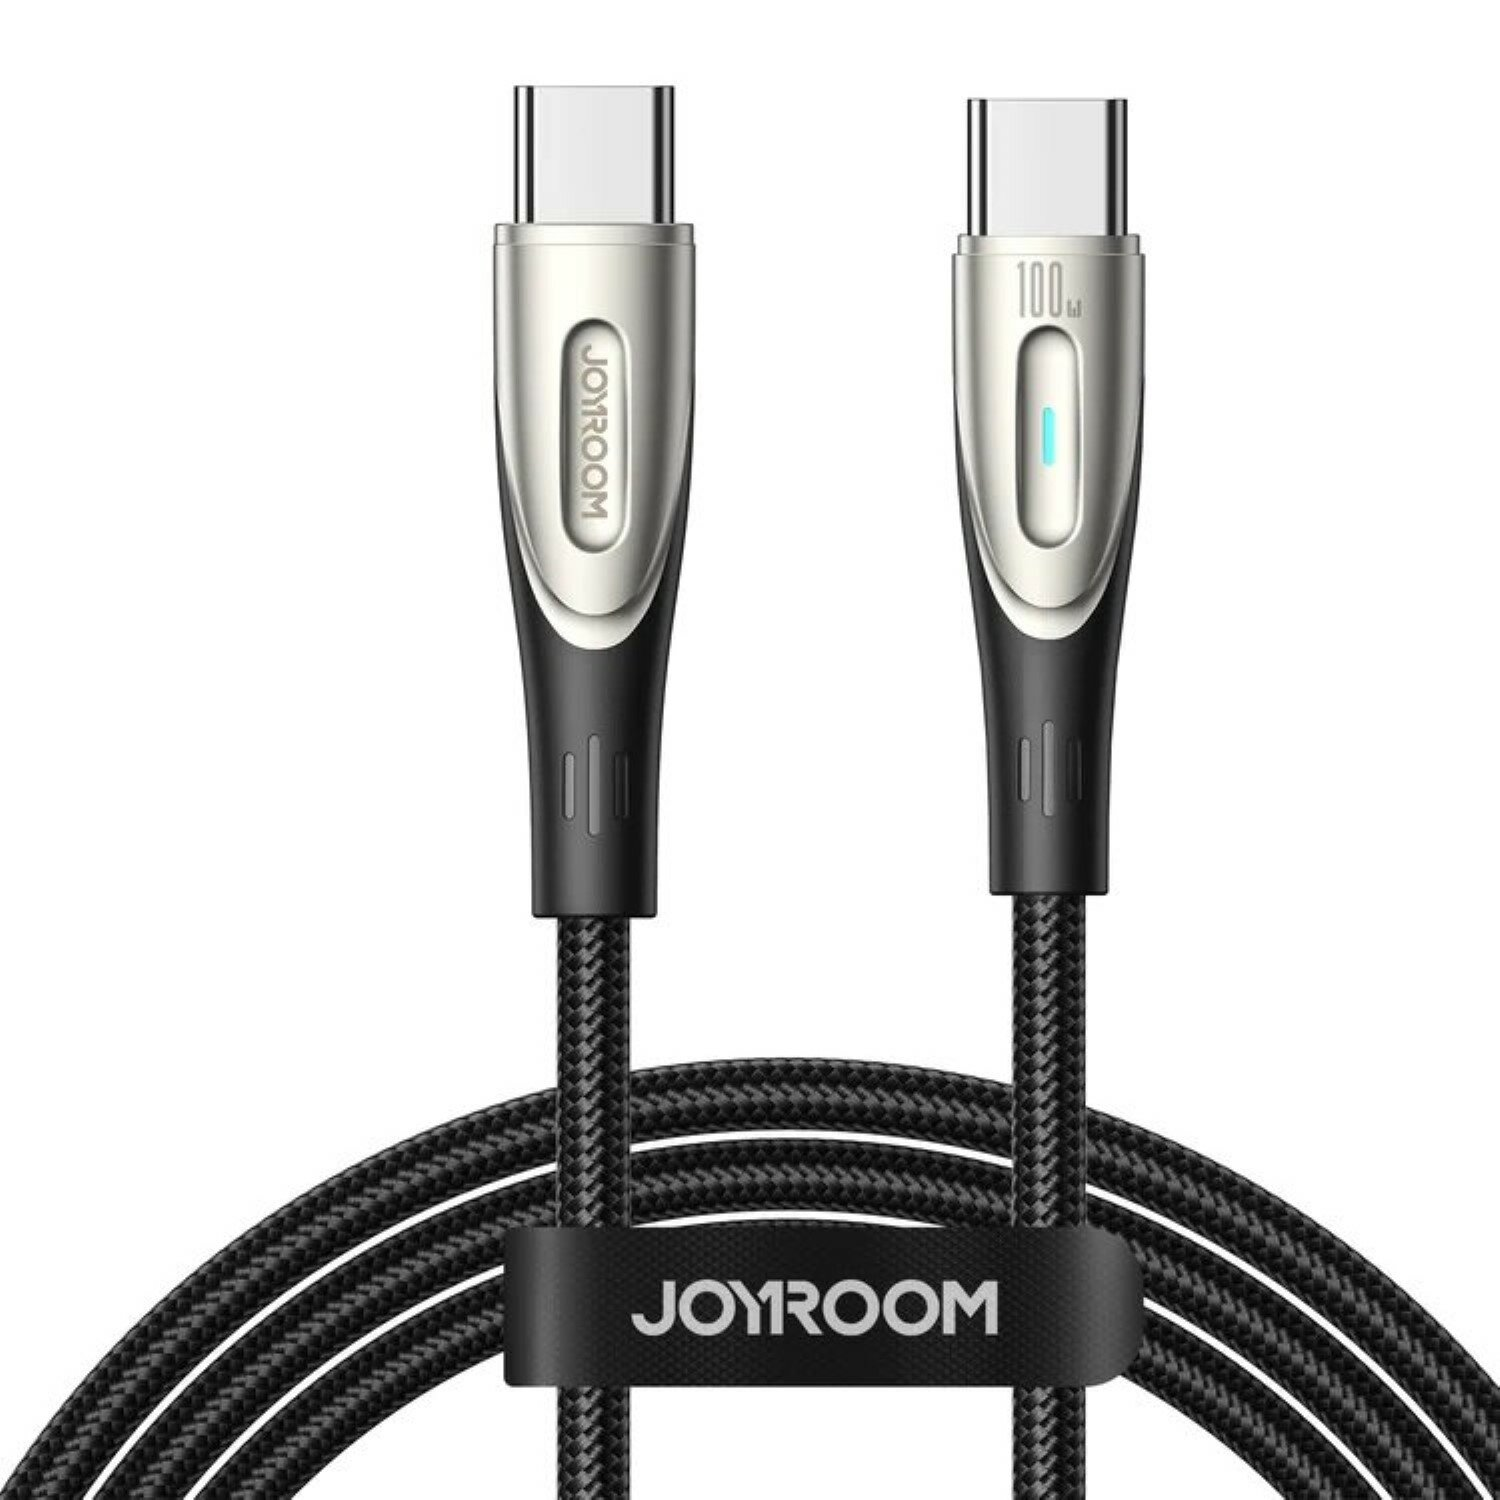 JOYROOM Star-Light Series Ladekabel, 100 USB-C / m, SA27-CC5 USB-C Schwarz W 3